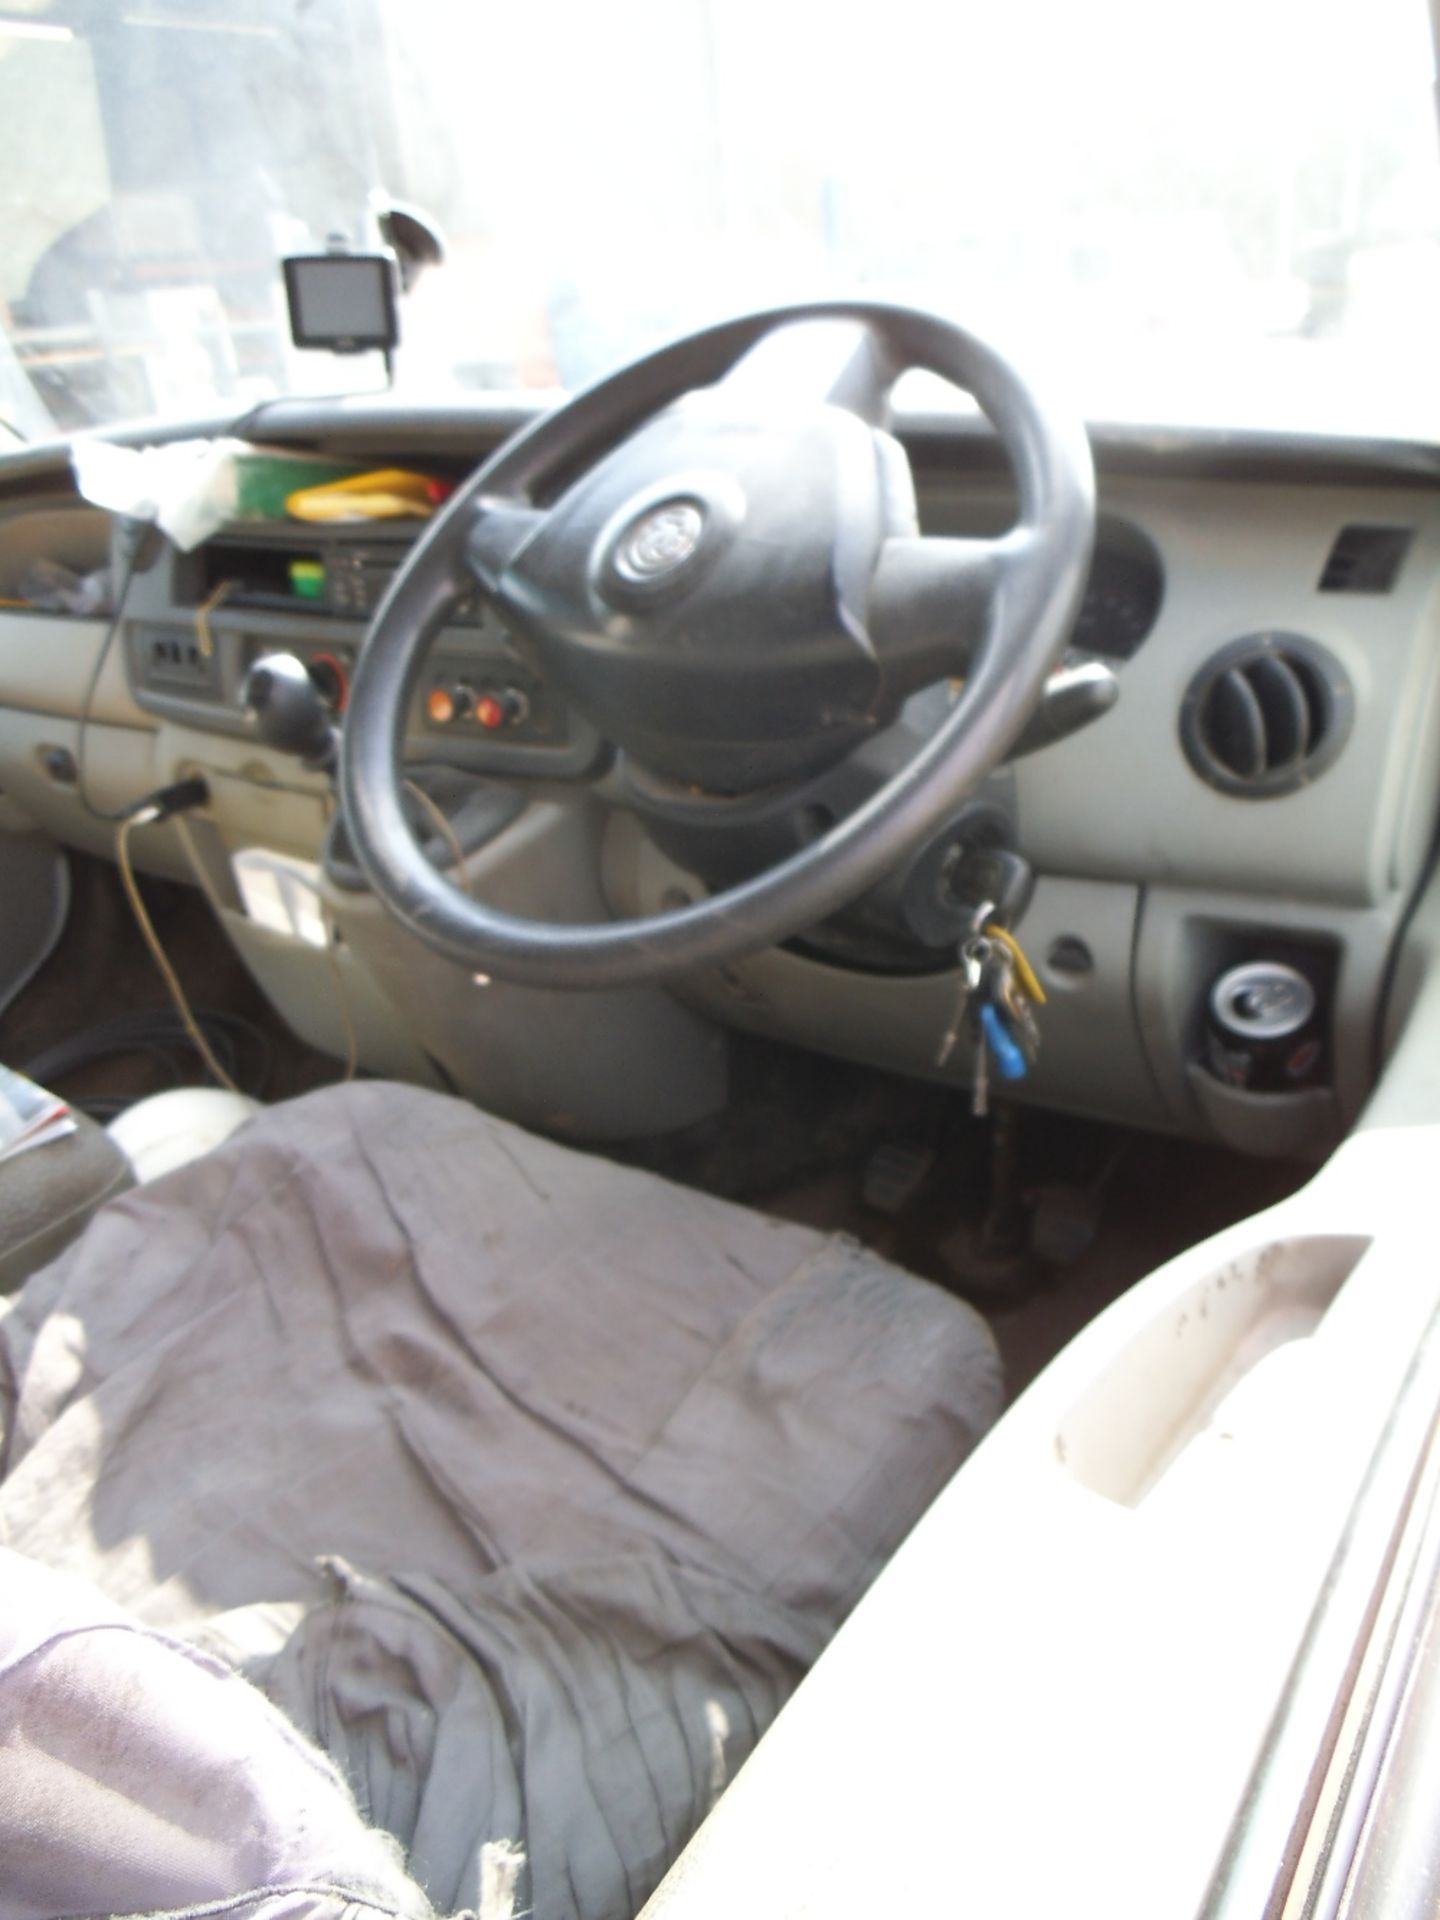 Vauxhall Movano DTI 3500 MWB Van, Reg No. KU05 UYC, First Registered: 22/03/05, Test Expires: 09/03/ - Image 4 of 4